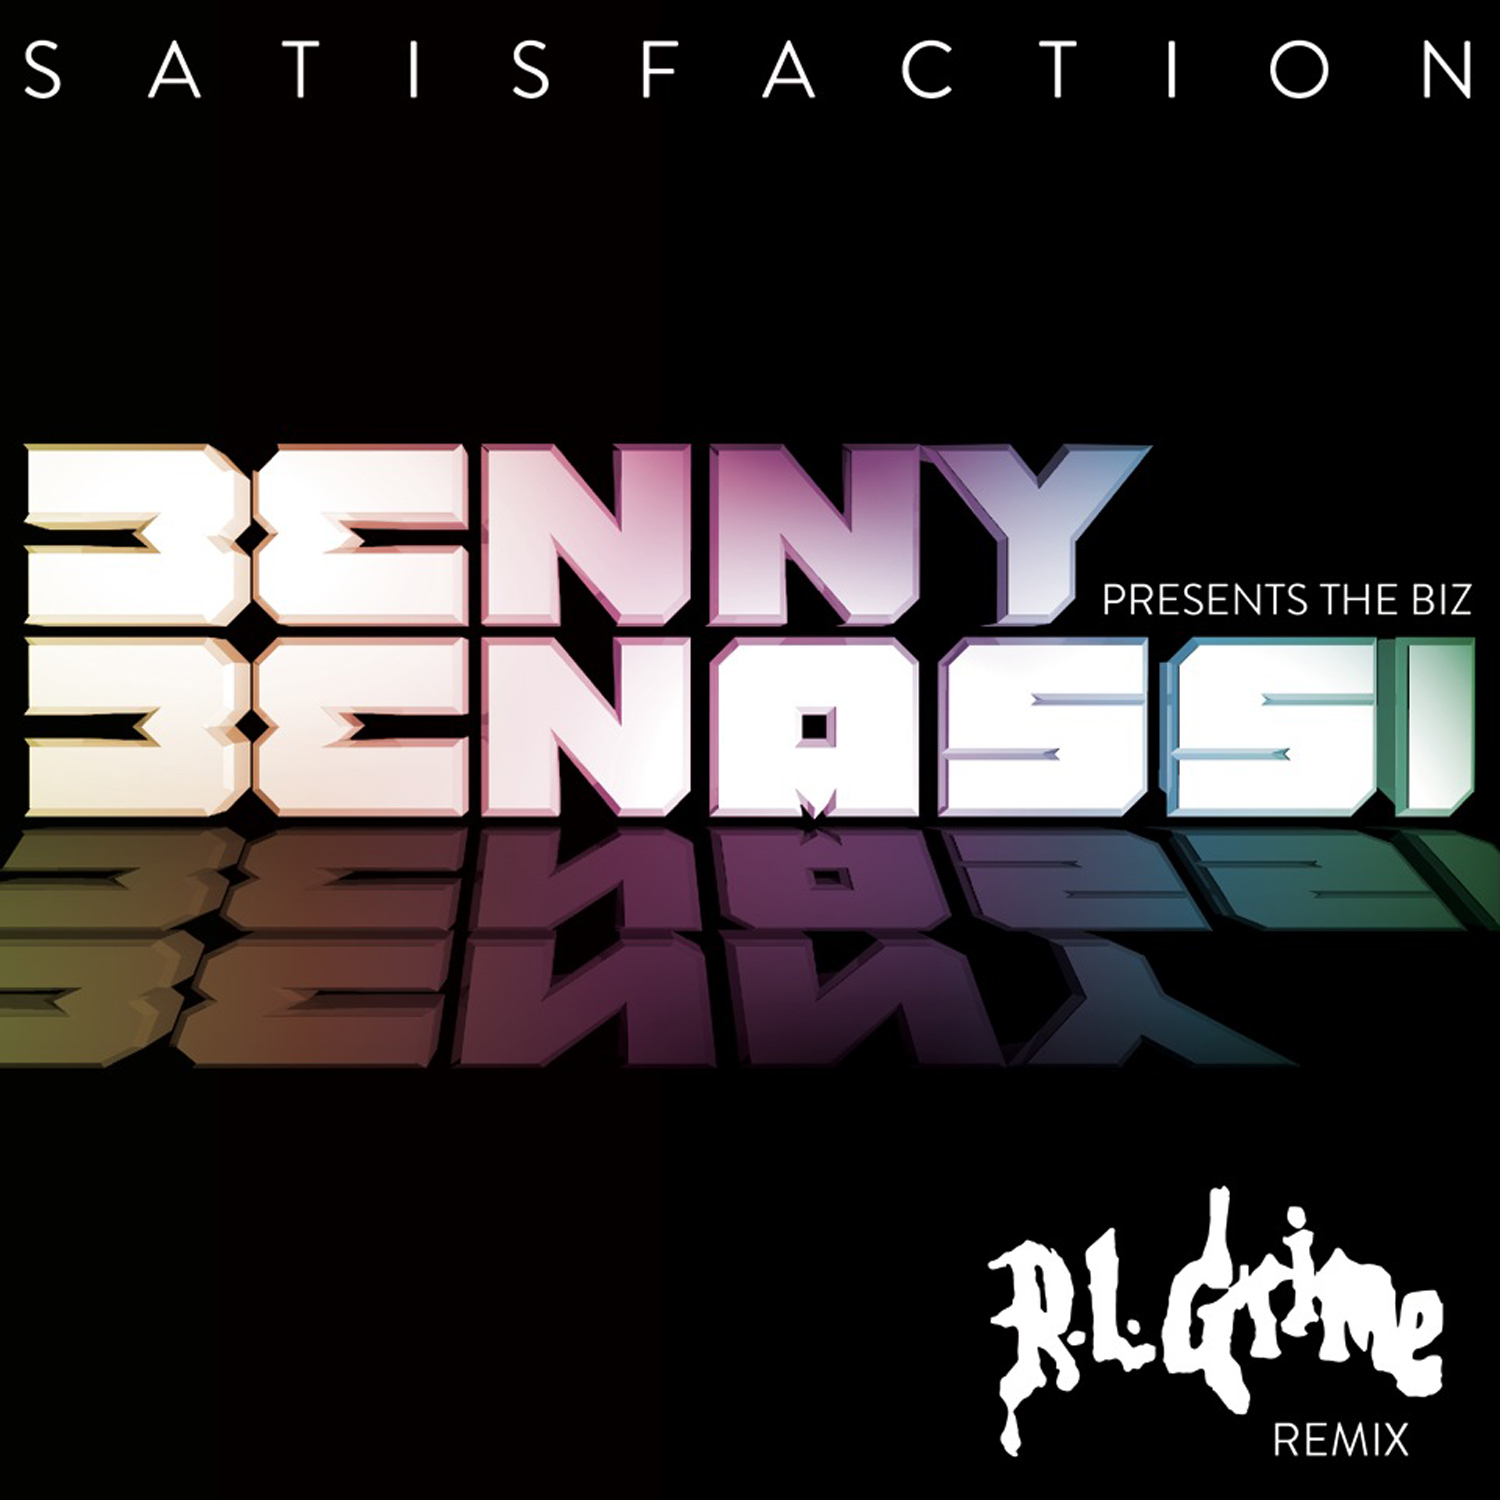 ڈاؤن لوڈ کریں Satisfaction (RL Grime Remix) - Benny Benassi (Preview)